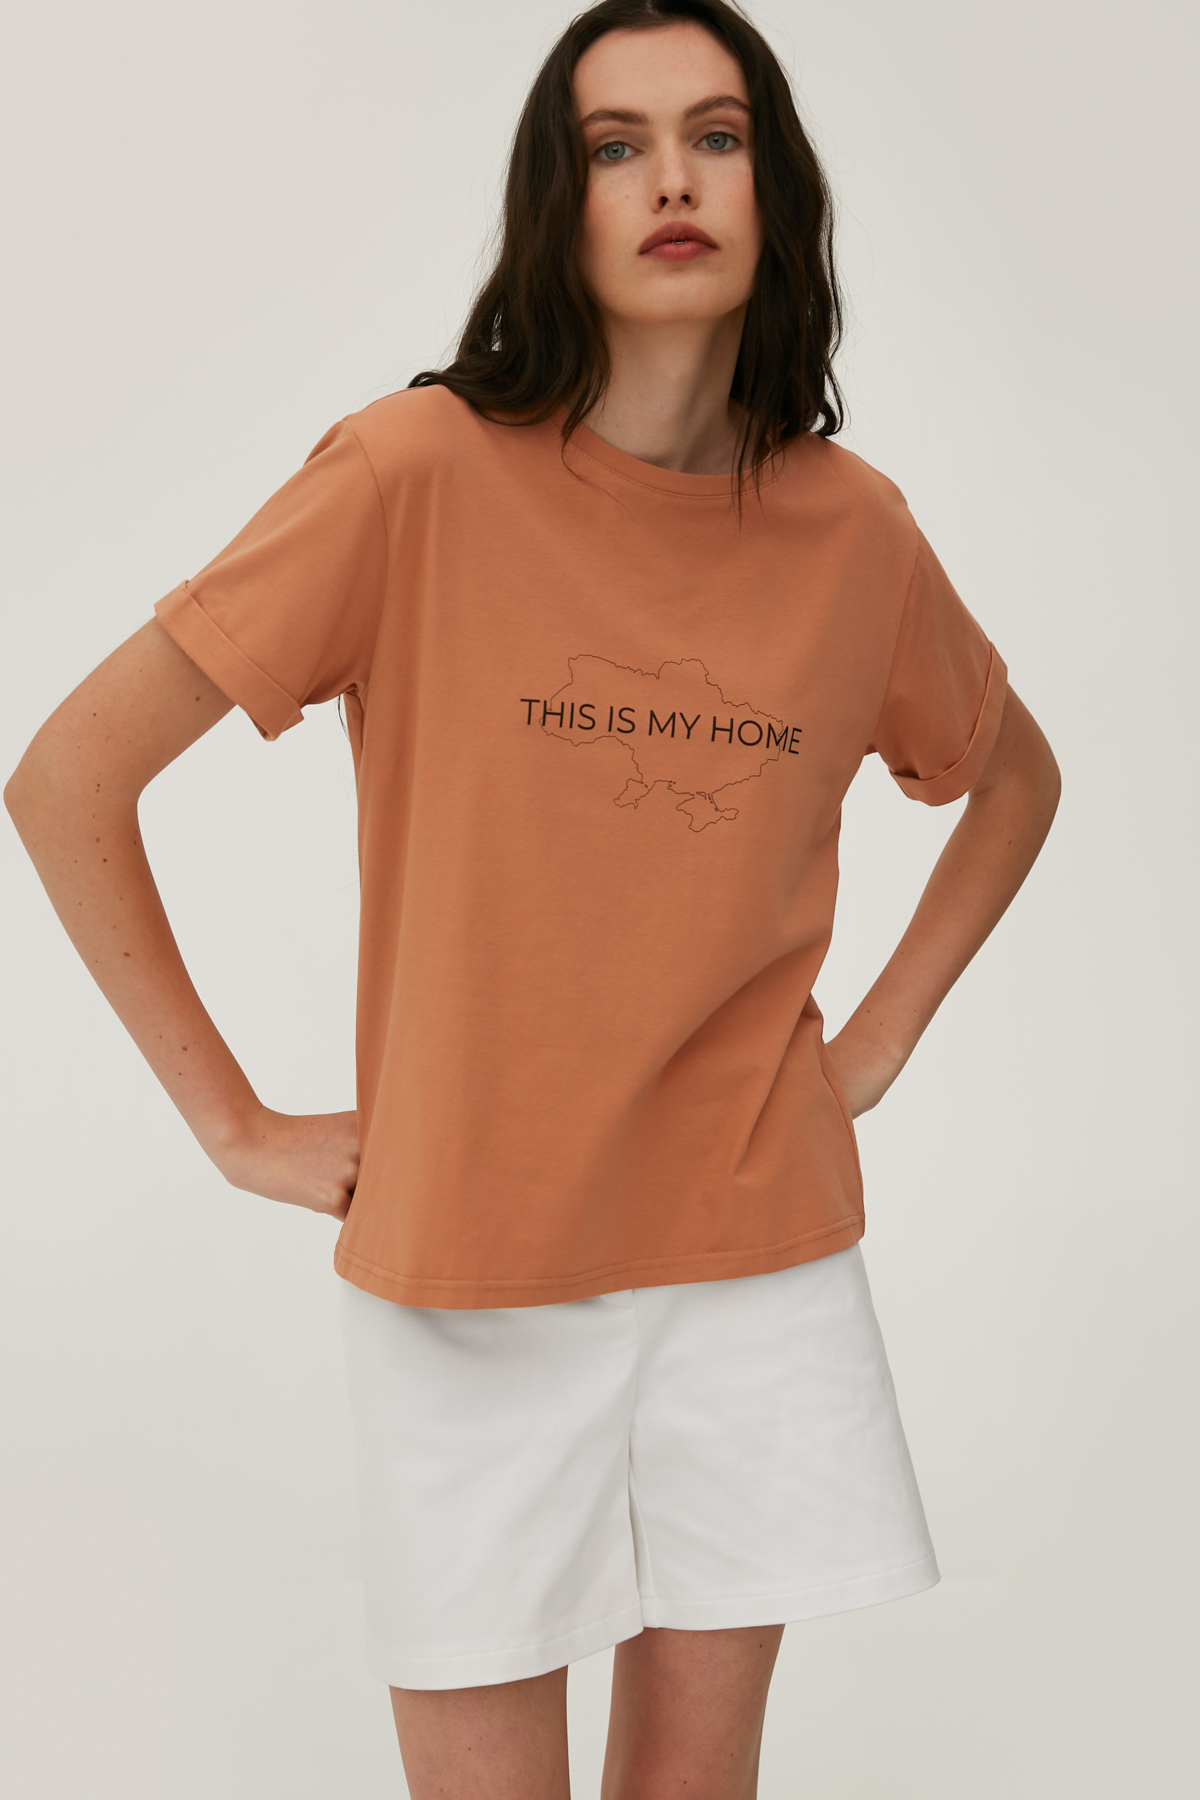 Карамельна футболка з написом "This is my home" з широким подовженим рукавом, фото 1